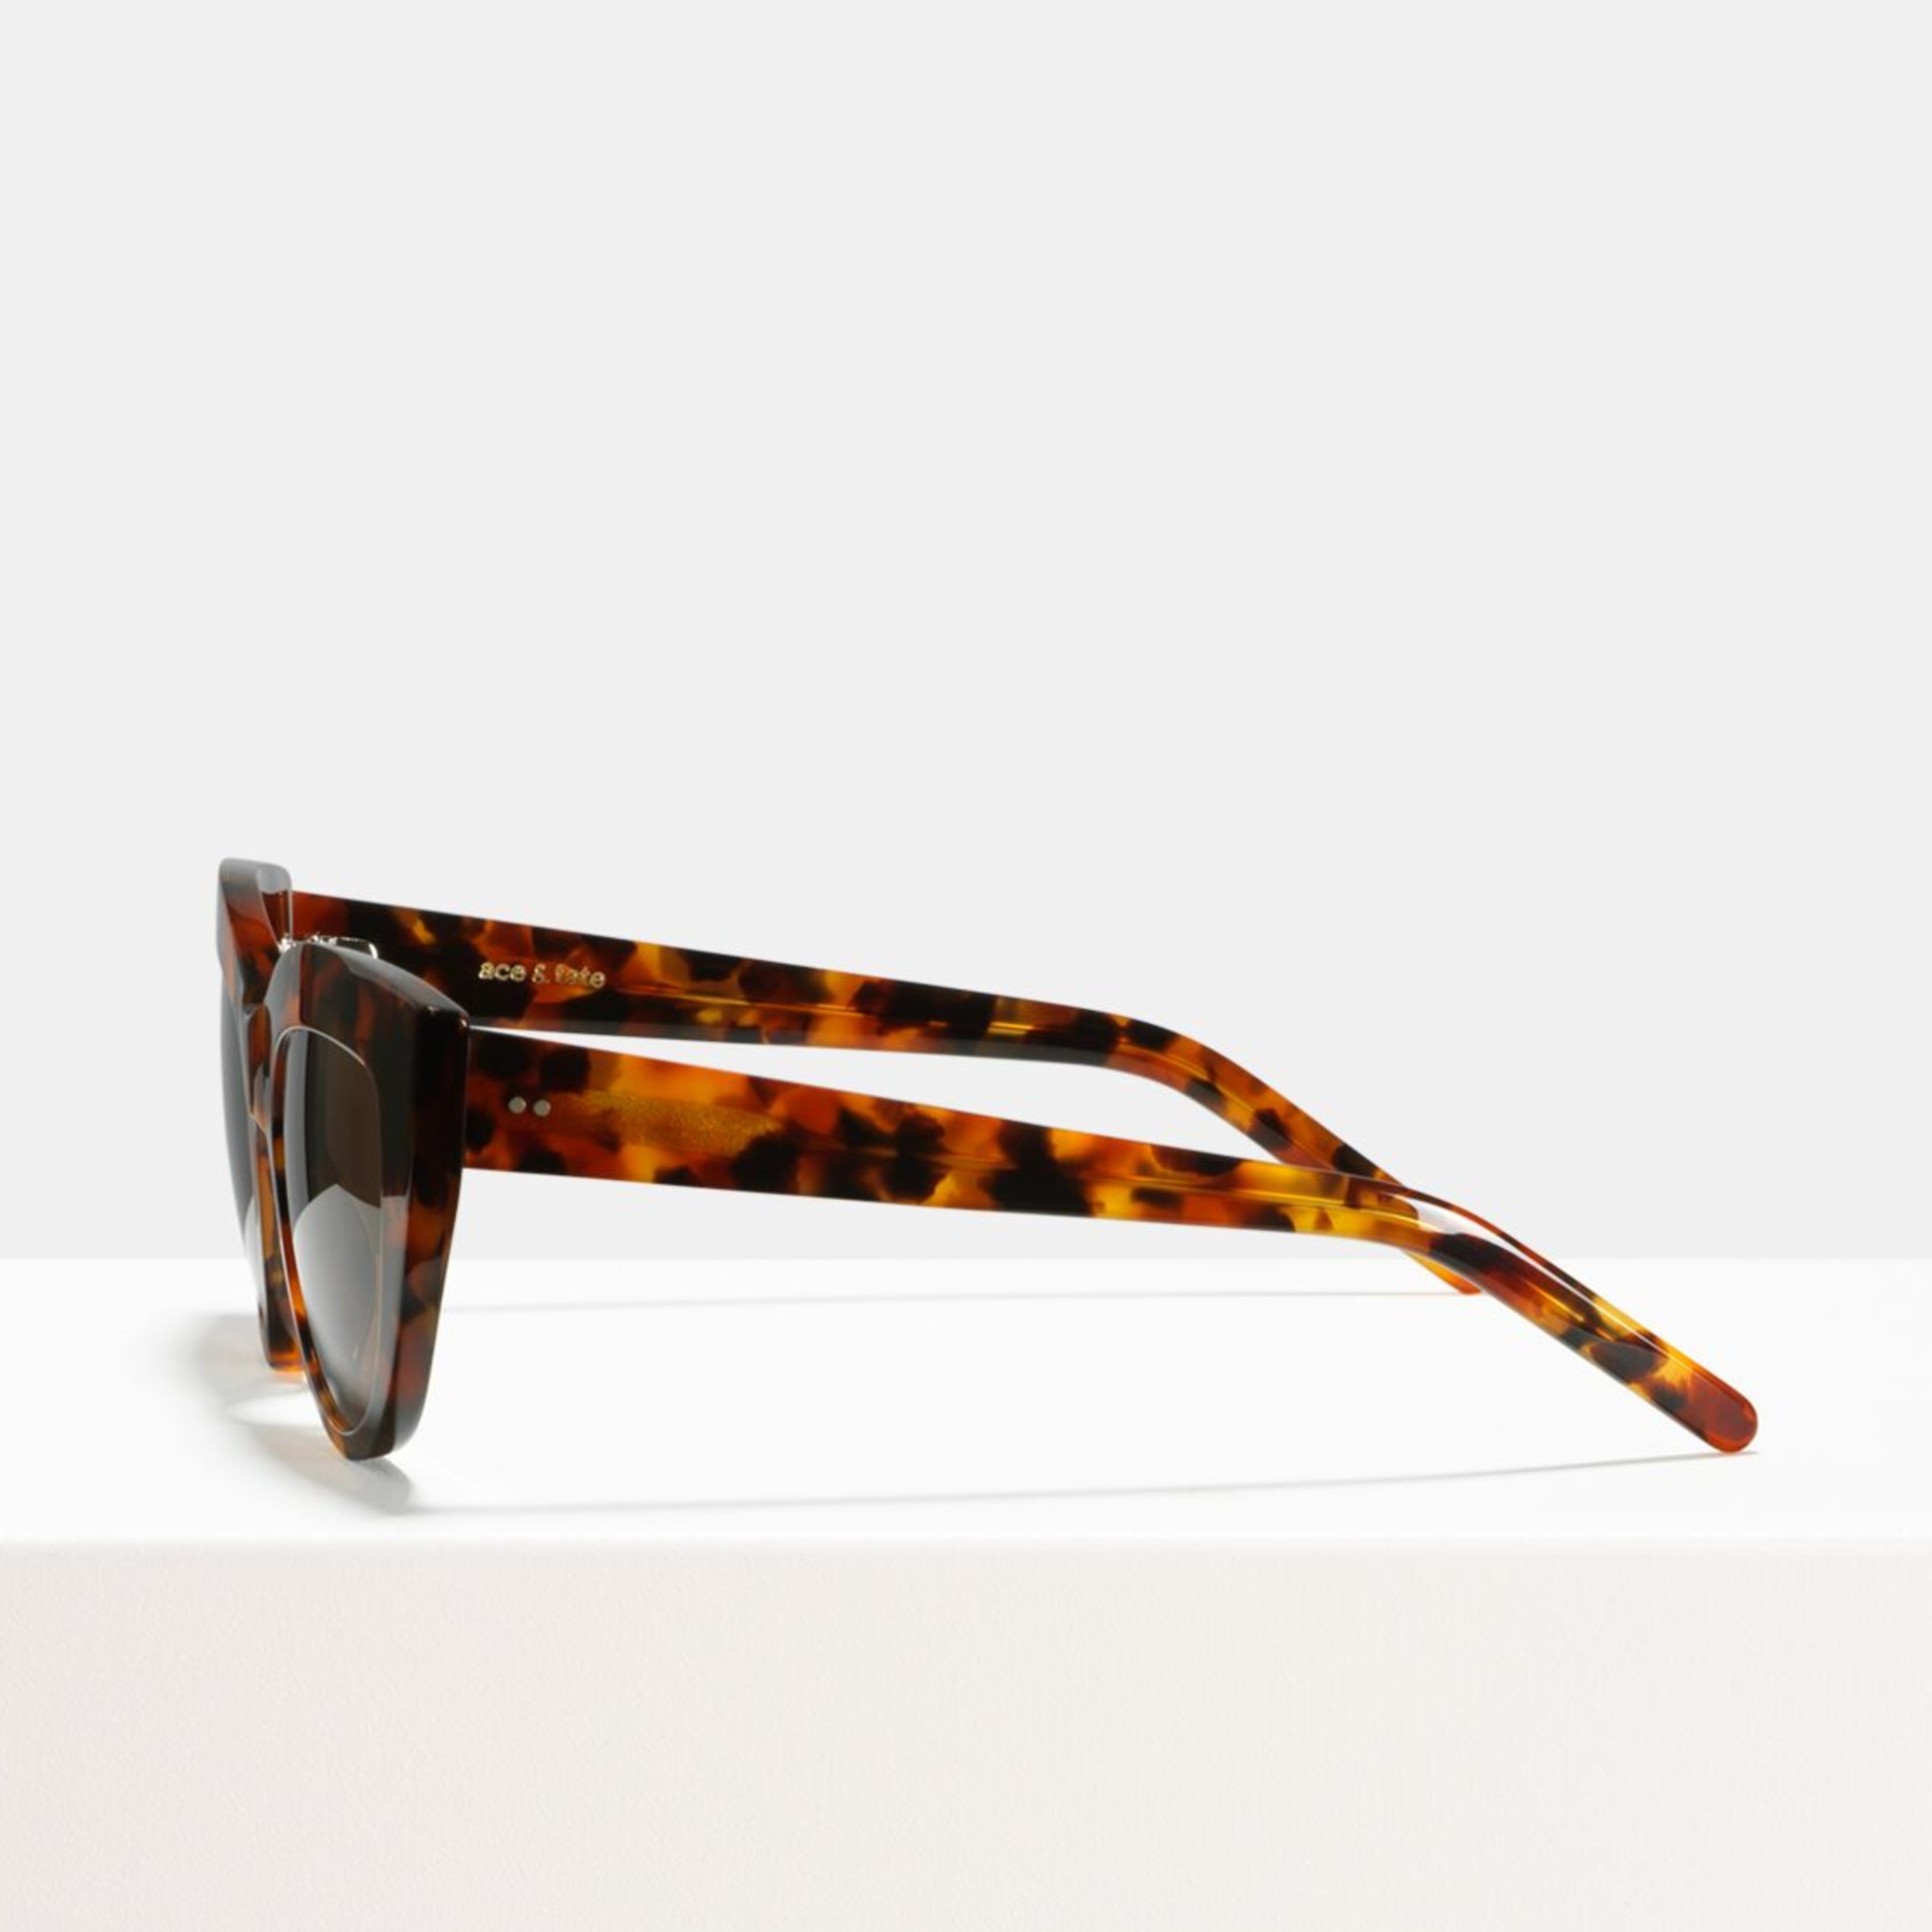 Ace & Tate Sunglasses |  acetate in Brown, Orange